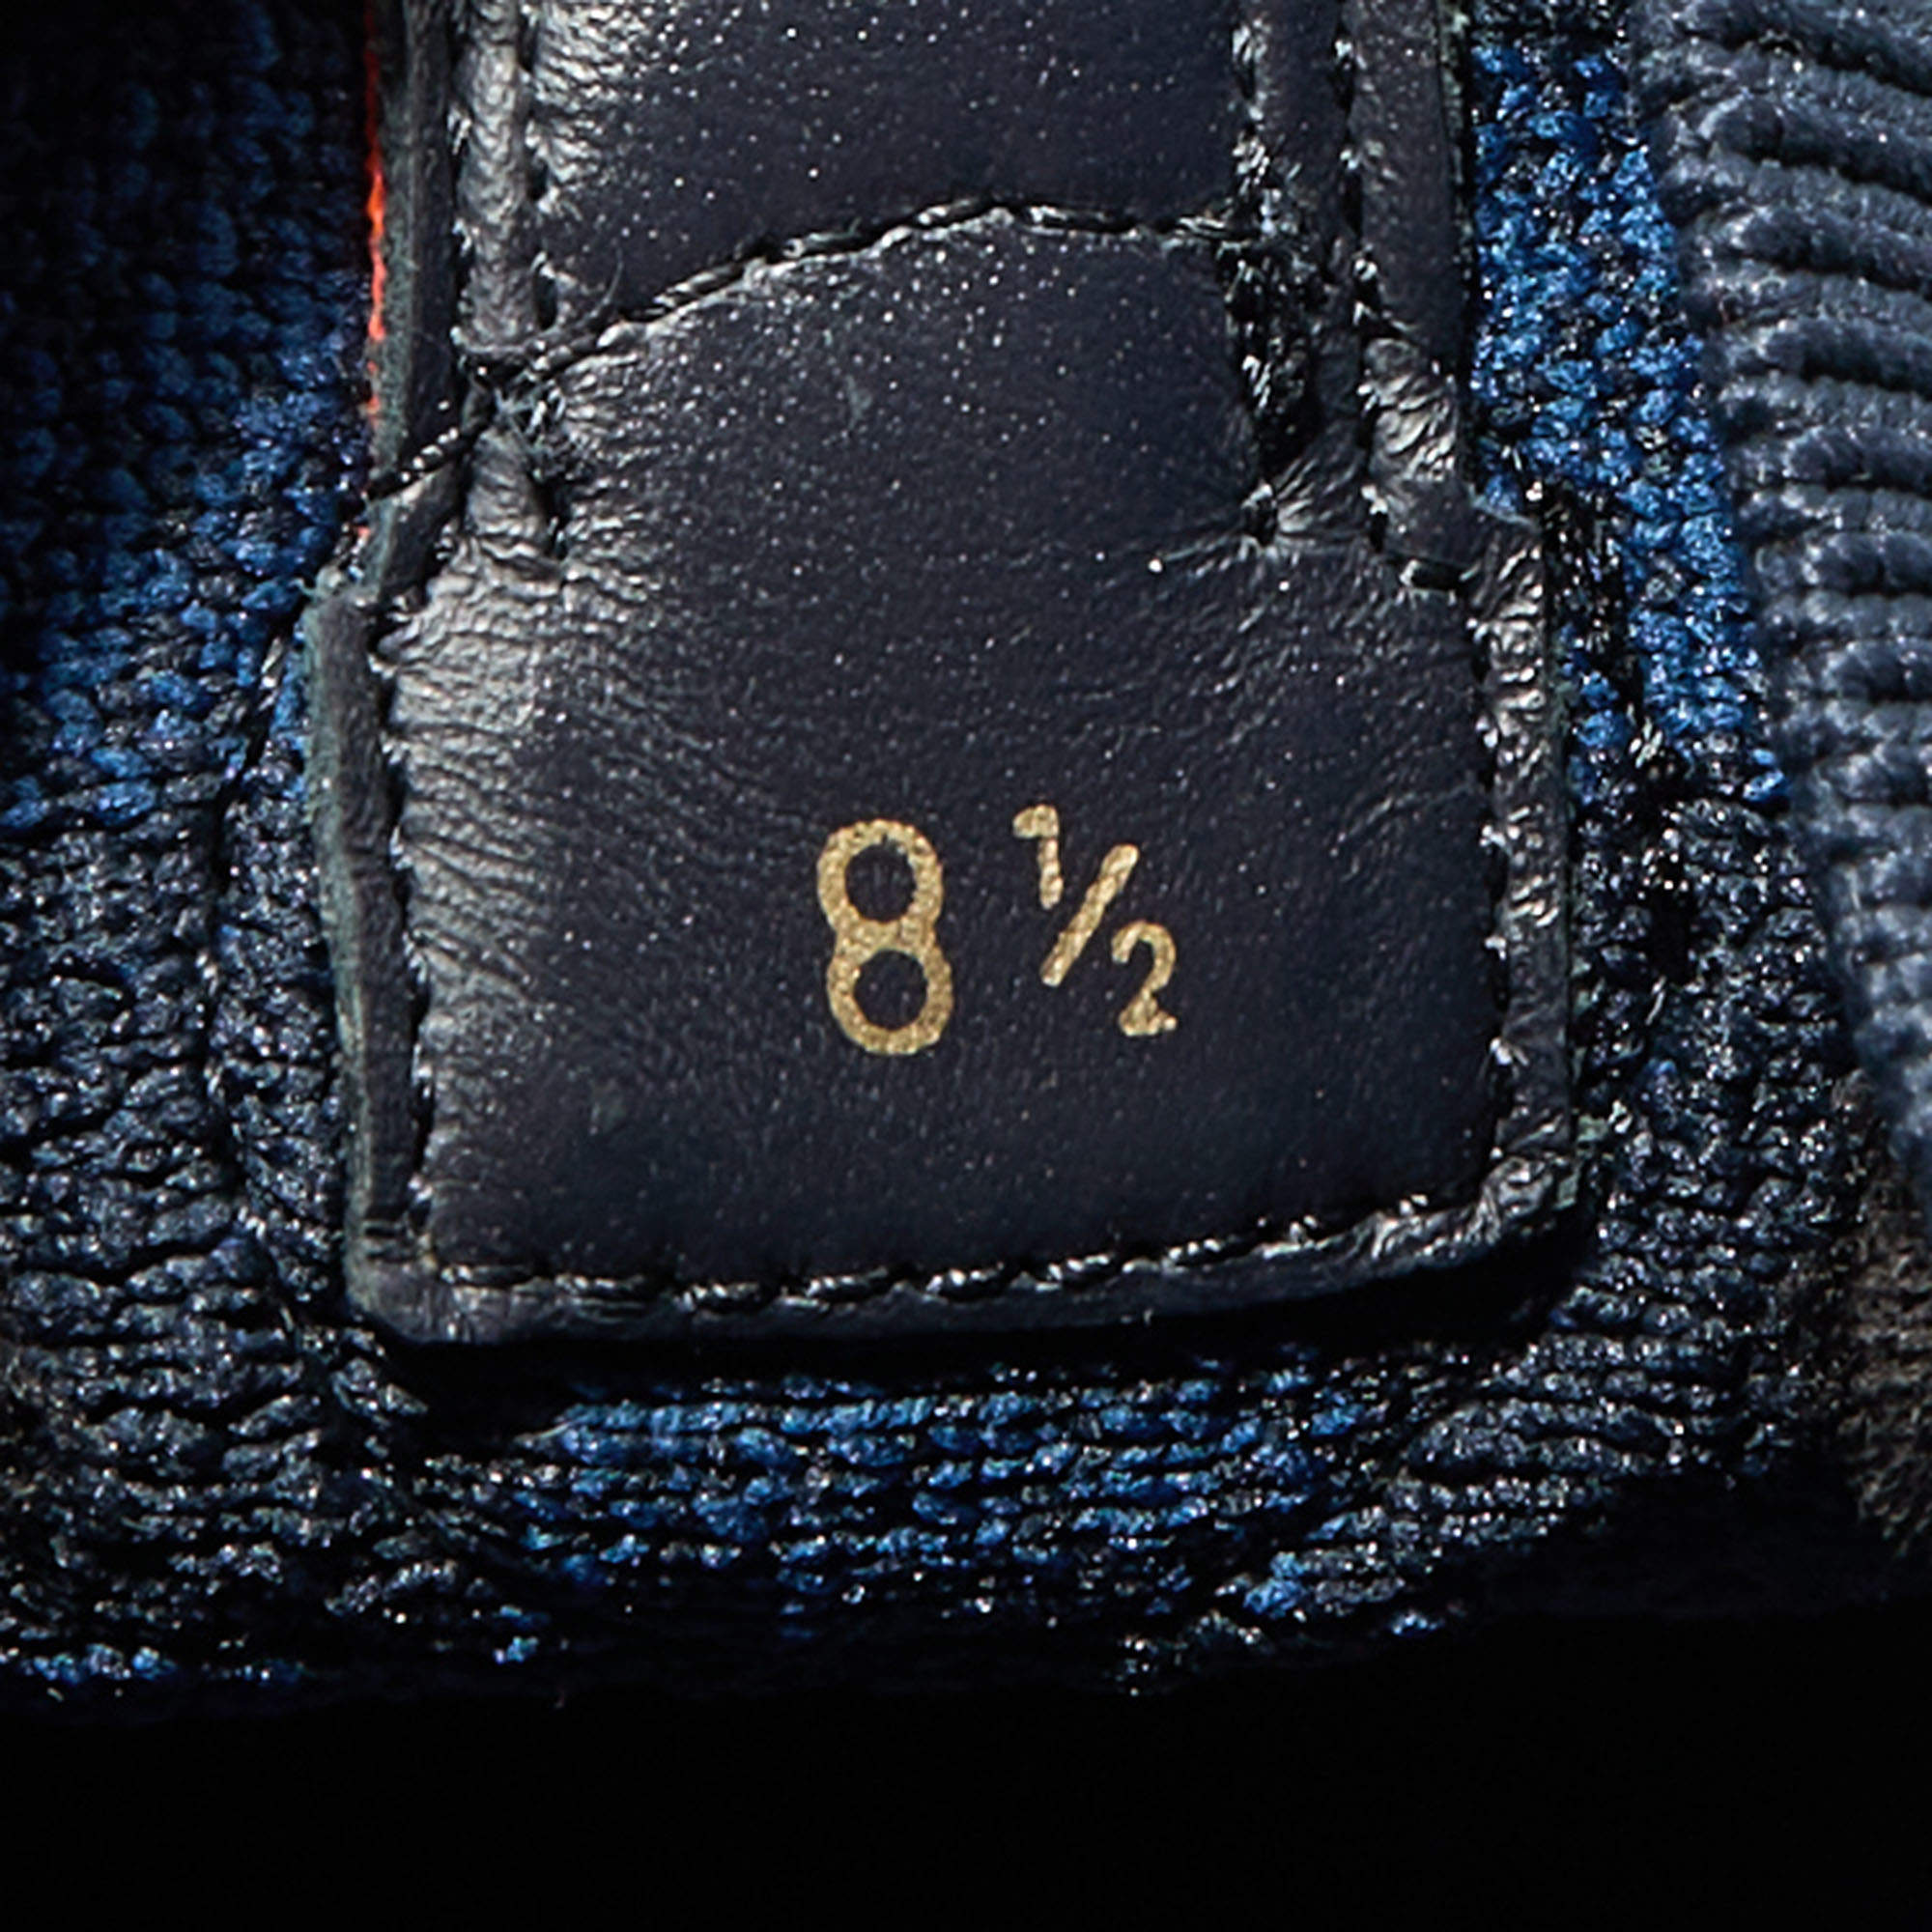 Louis Vuitton, Shoes, Louis Vuitton Whiteblue Mesh Knit Fabric Fastlane  Low Top Sneakers Size 85